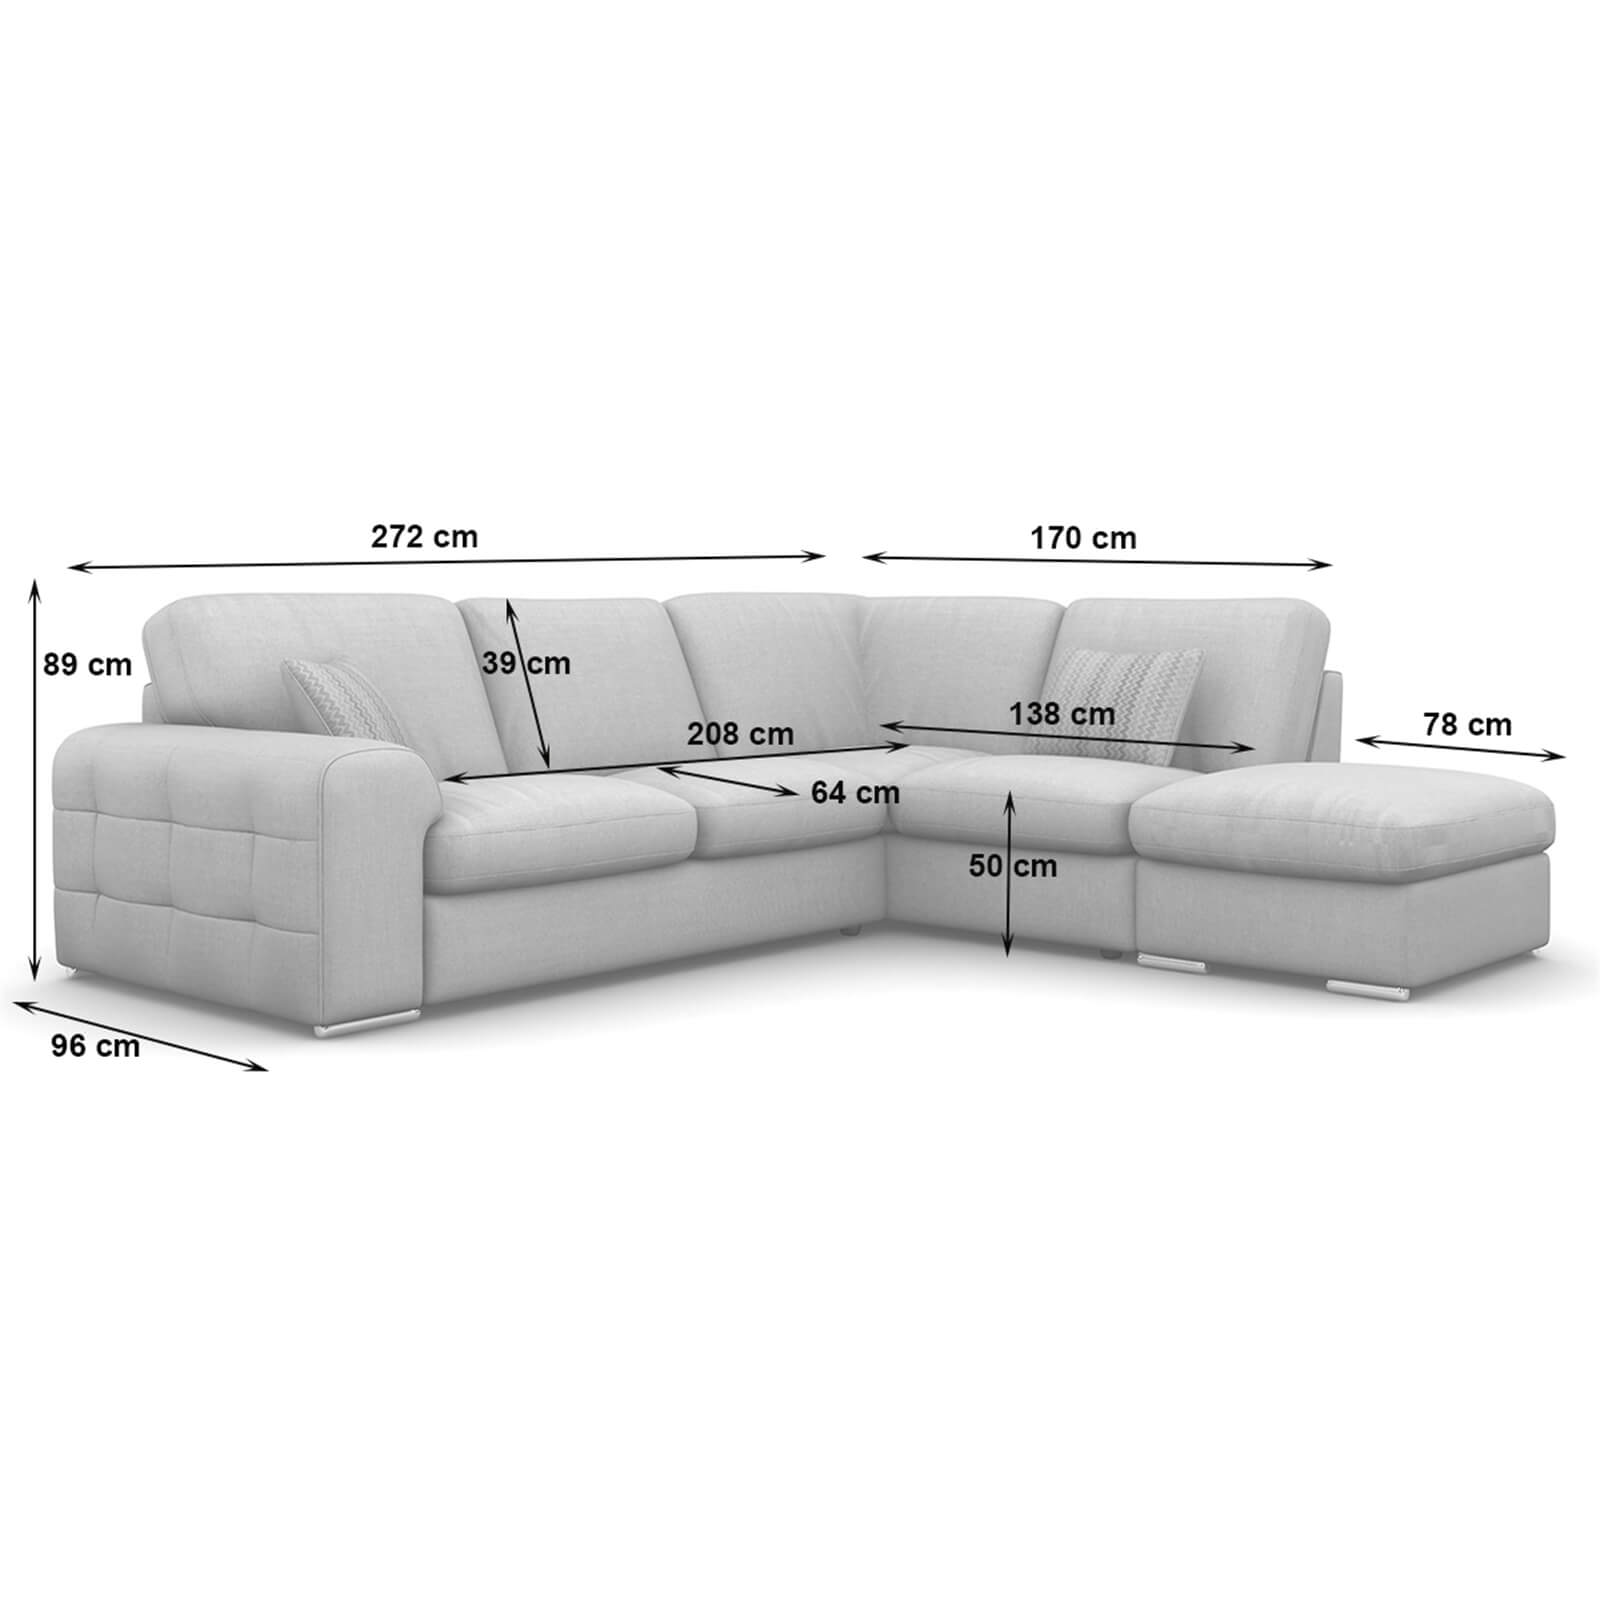 Amethyst Righthand Corner Sofa - Charcoal